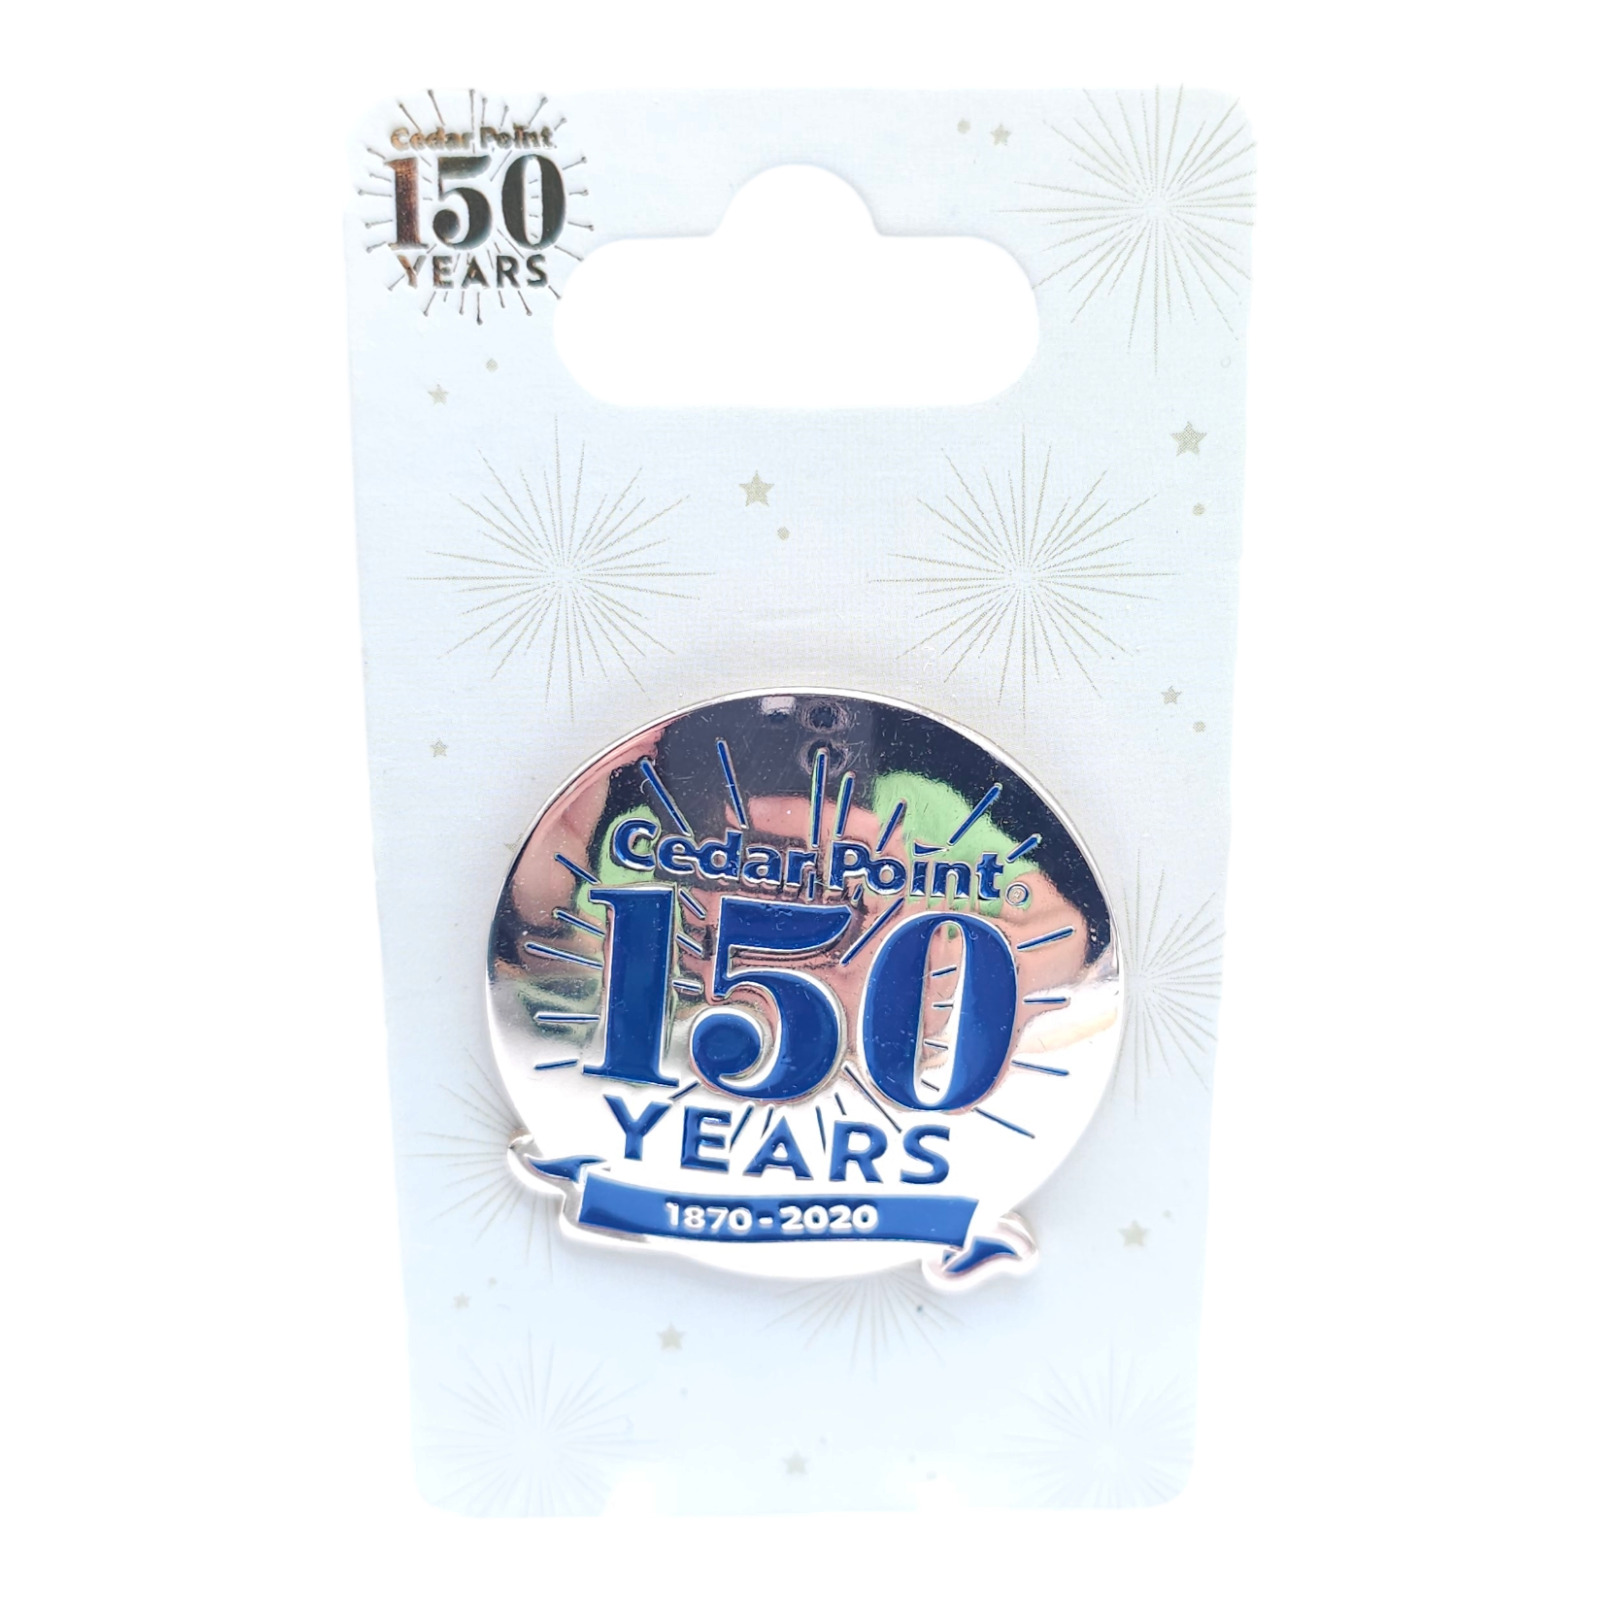 NWT Cedar Fair Cedar Point 150 Years 1870-2020 Pin